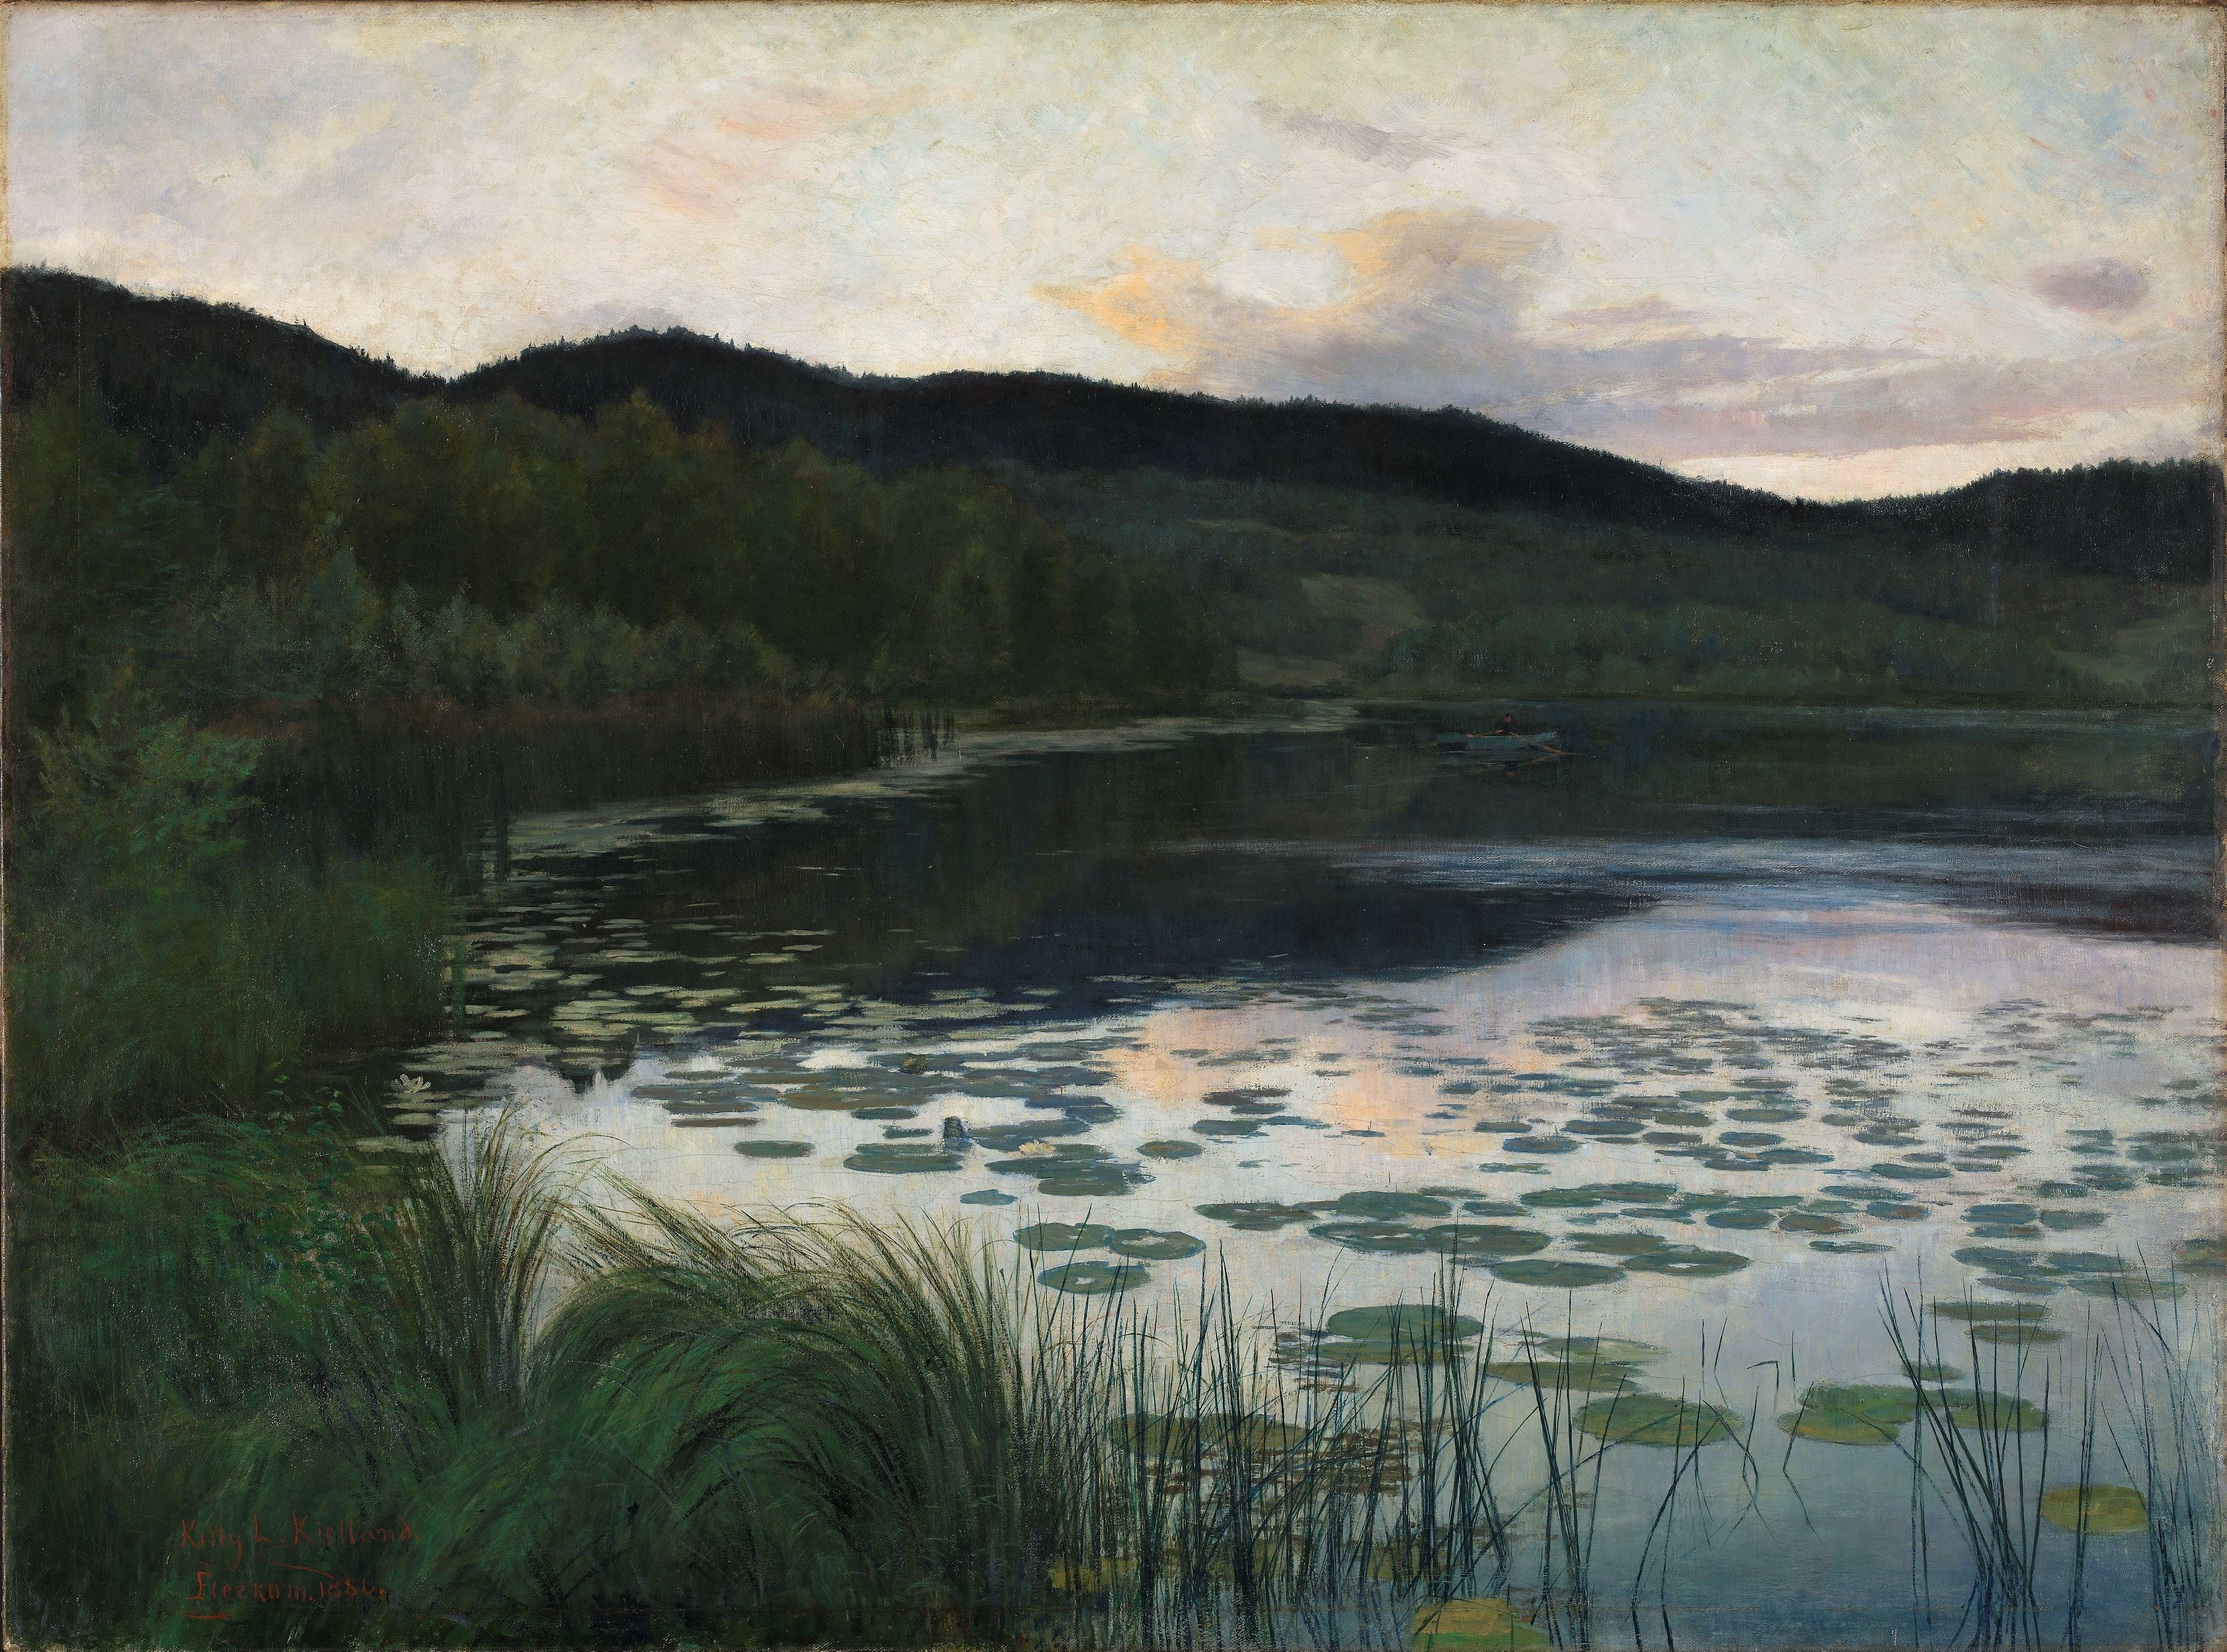 Summer Night by Kitty Kielland - 1886 - 135.5 x 100.5 cm Nasjonalmuseet